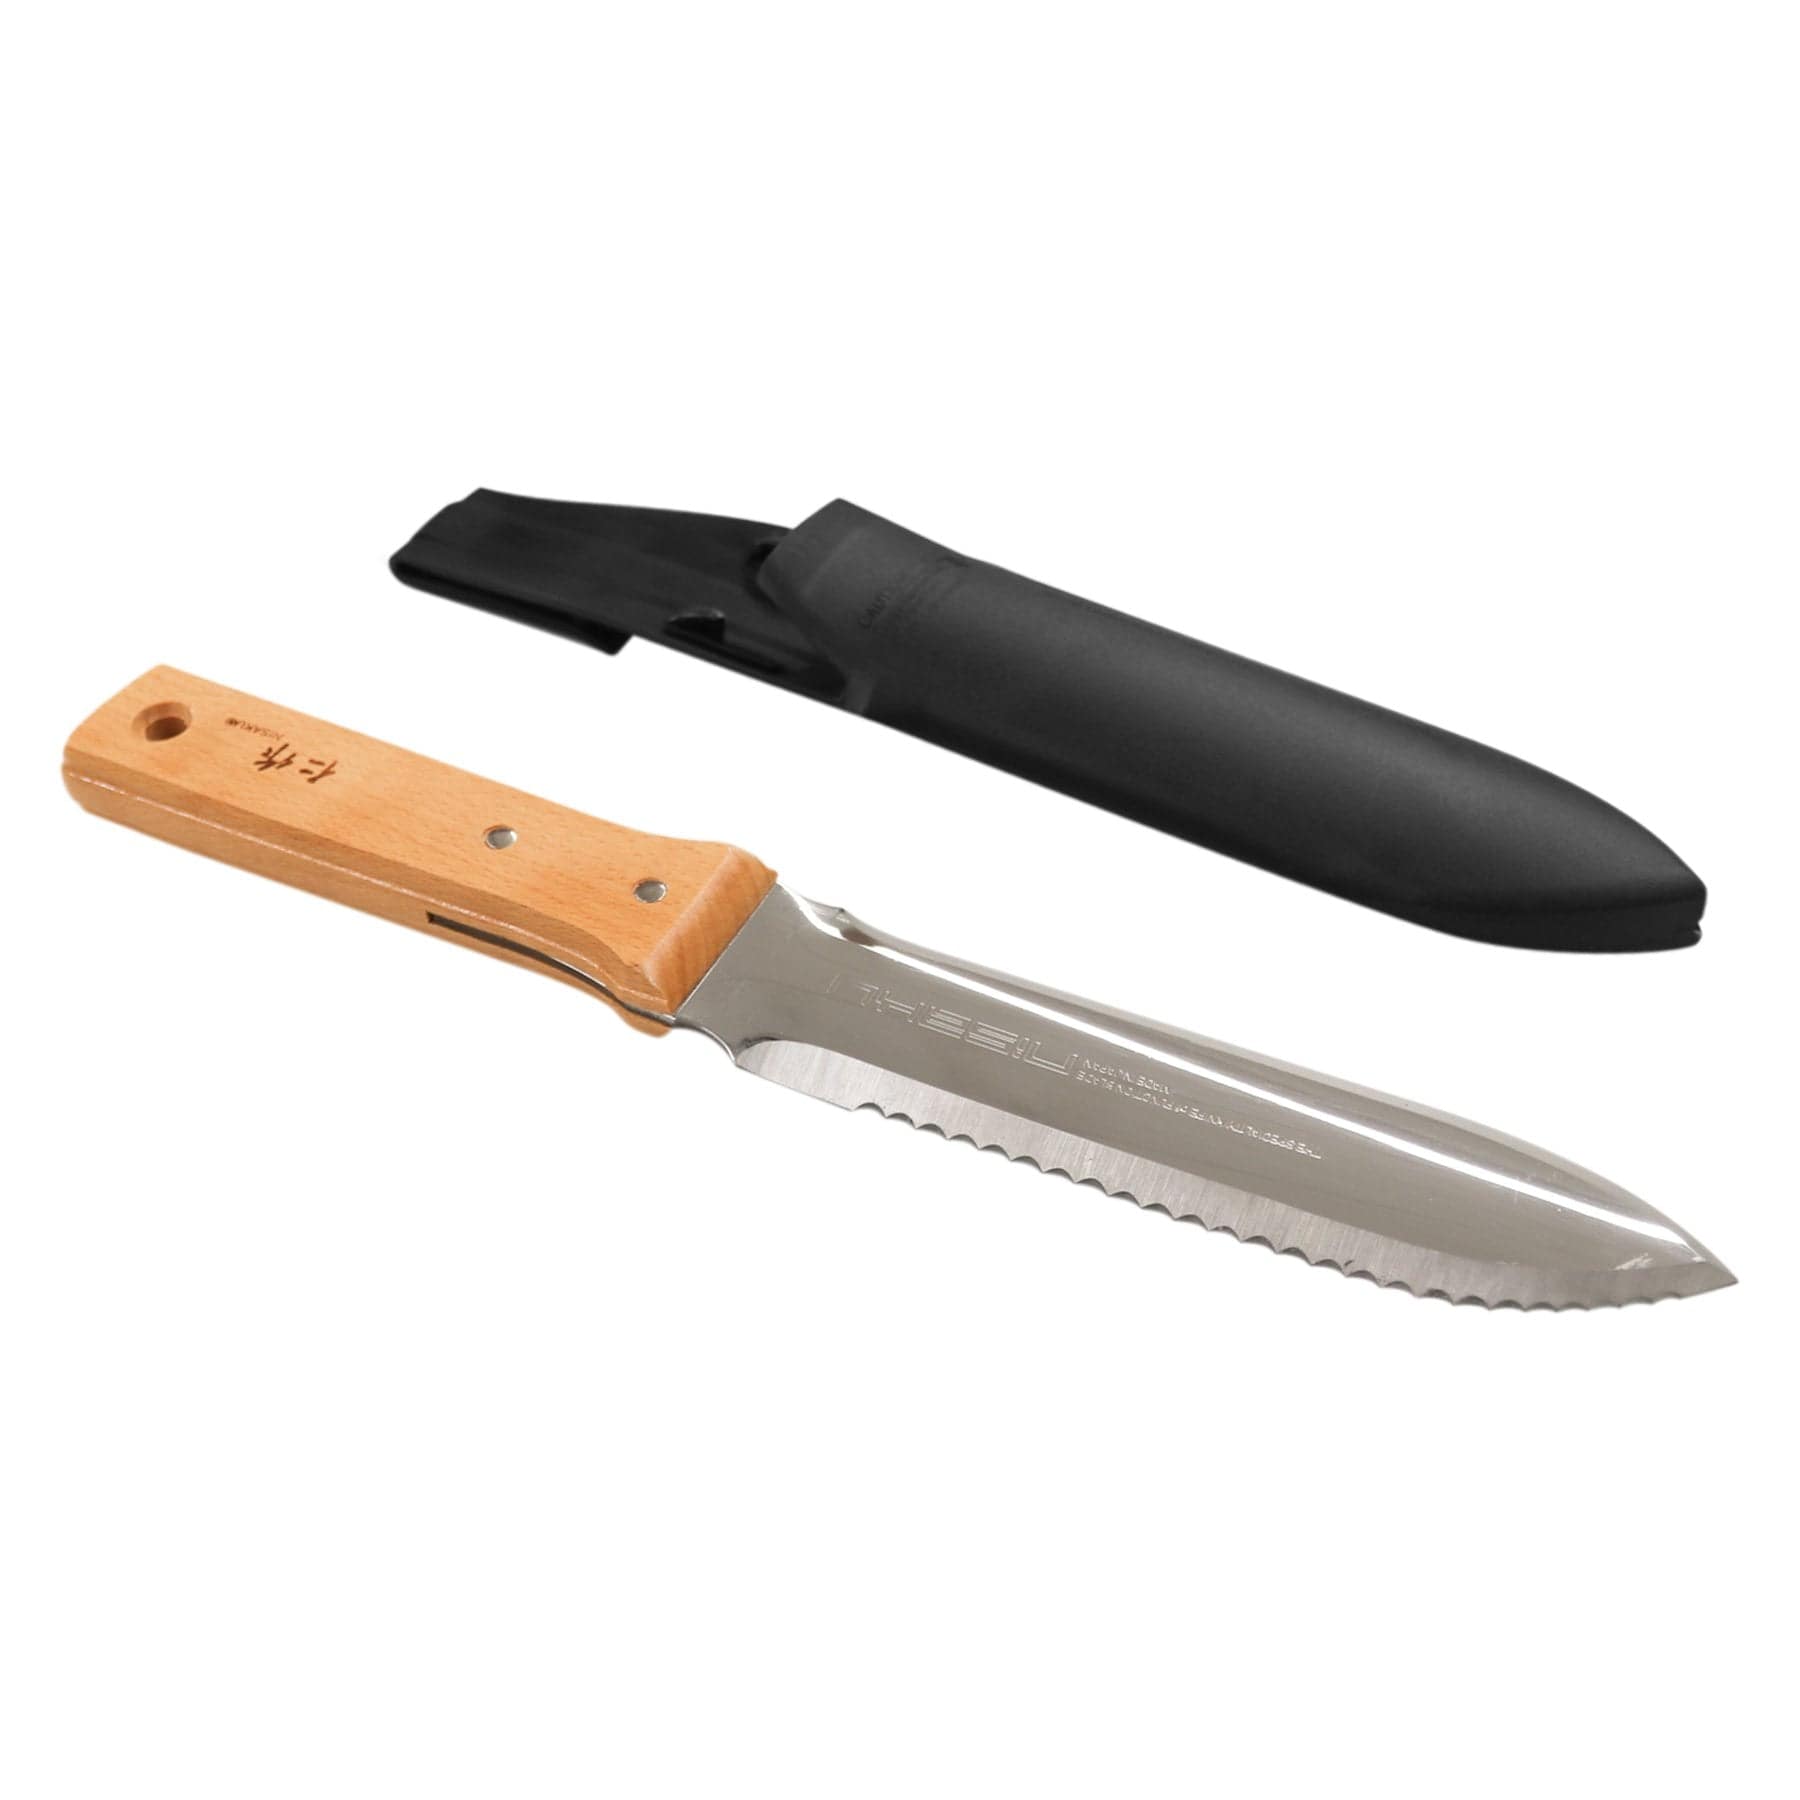 Nisaku Gardening Accessories > Propagation Tools > Secateurs & Scissors Nisaku Hori-Hori No. 6510 (Horticultural Knife)